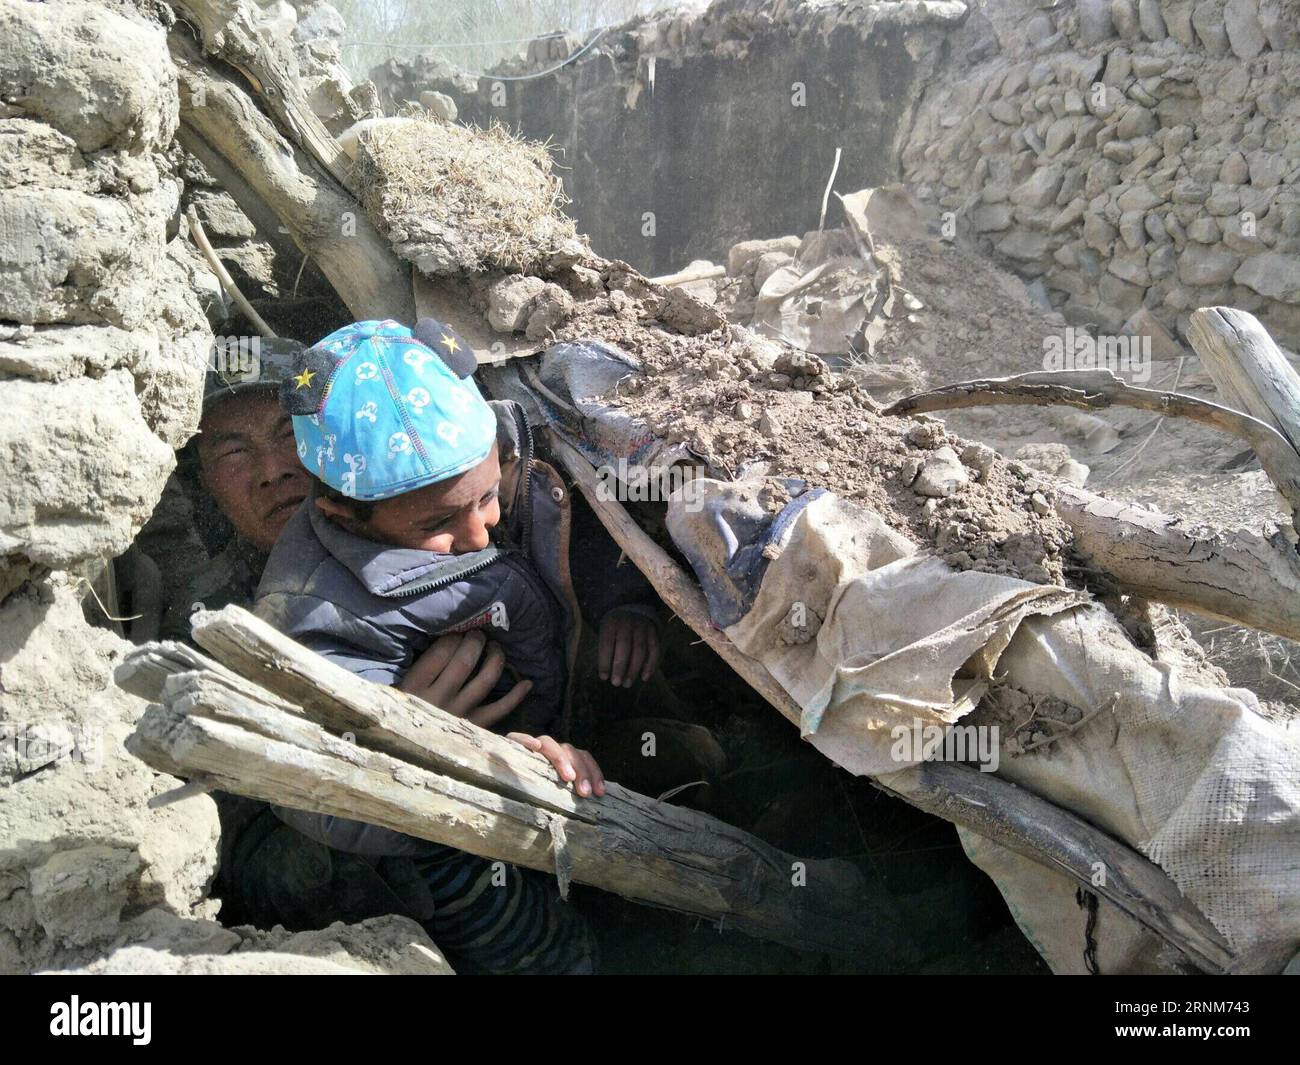 (170514) -- BEIJING, May 14, 2017 -- Rescuer Chen Zhigang saves a boy of the Tajik ethnic group at Quzgun Village in quake-hit Taxkorgan County, northwest China s Xinjiang Uygur Autonomous Region, May 11, 2017. ) (yxb) XINHUA PHOTO WEEKLY CHOICES YuexXiaoping PUBLICATIONxNOTxINxCHN   Beijing May 14 2017 Rescuer Chen Zhigang SAVES a Boy of The Tajik Ethnic Group AT  Village in Quake Hit Taxkorgan County Northwest China S Xinjiang Uygur Autonomous Region May 11 2017 yxb XINHUA Photo Weekly Choices  PUBLICATIONxNOTxINxCHN Stock Photo